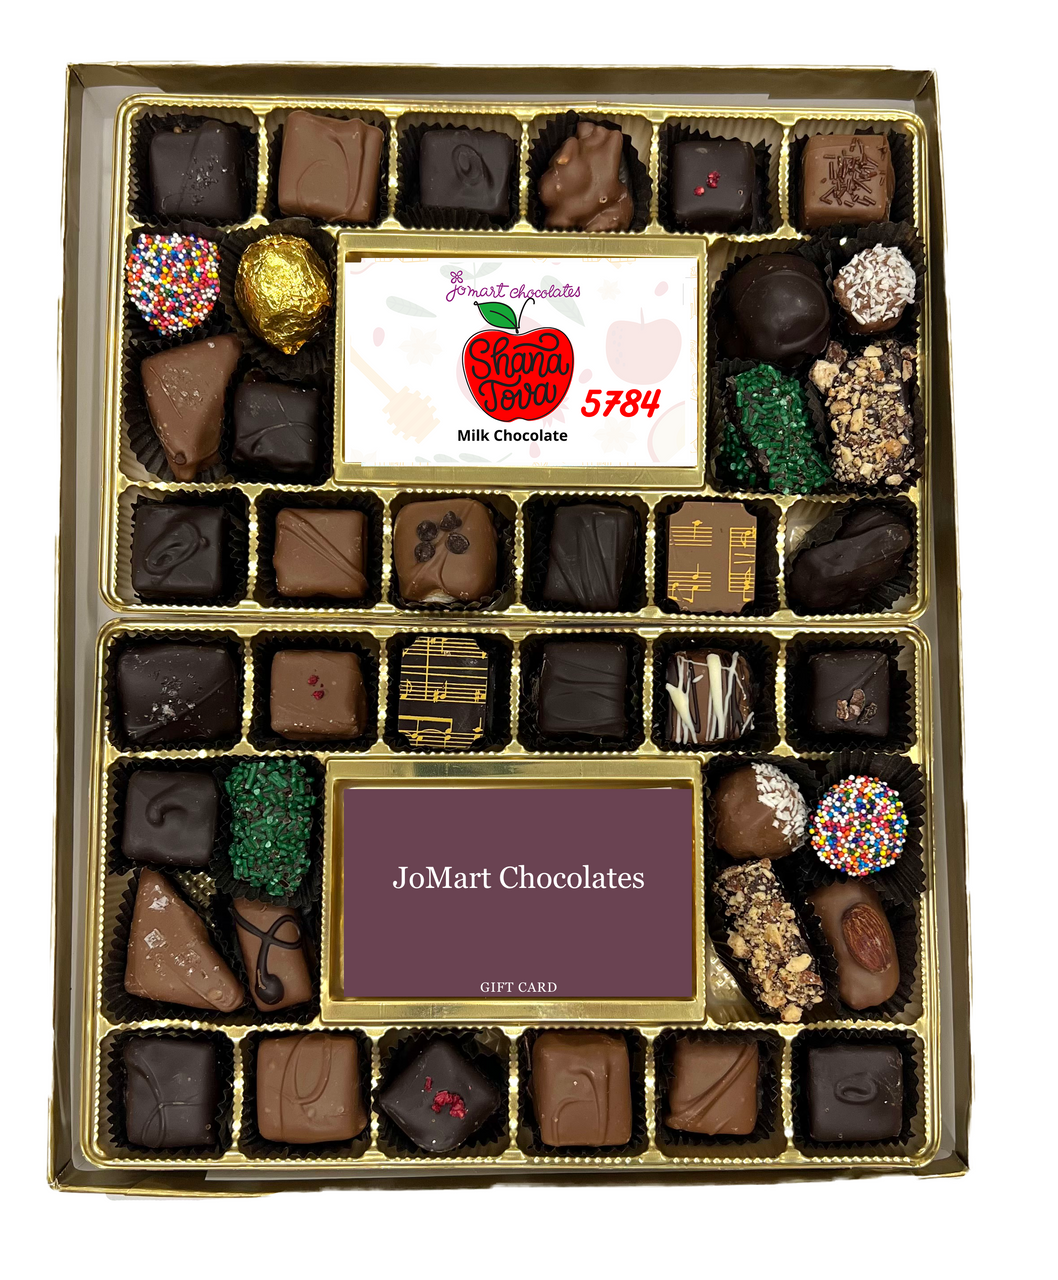 A Box of Chocolates - Sharifa Creates